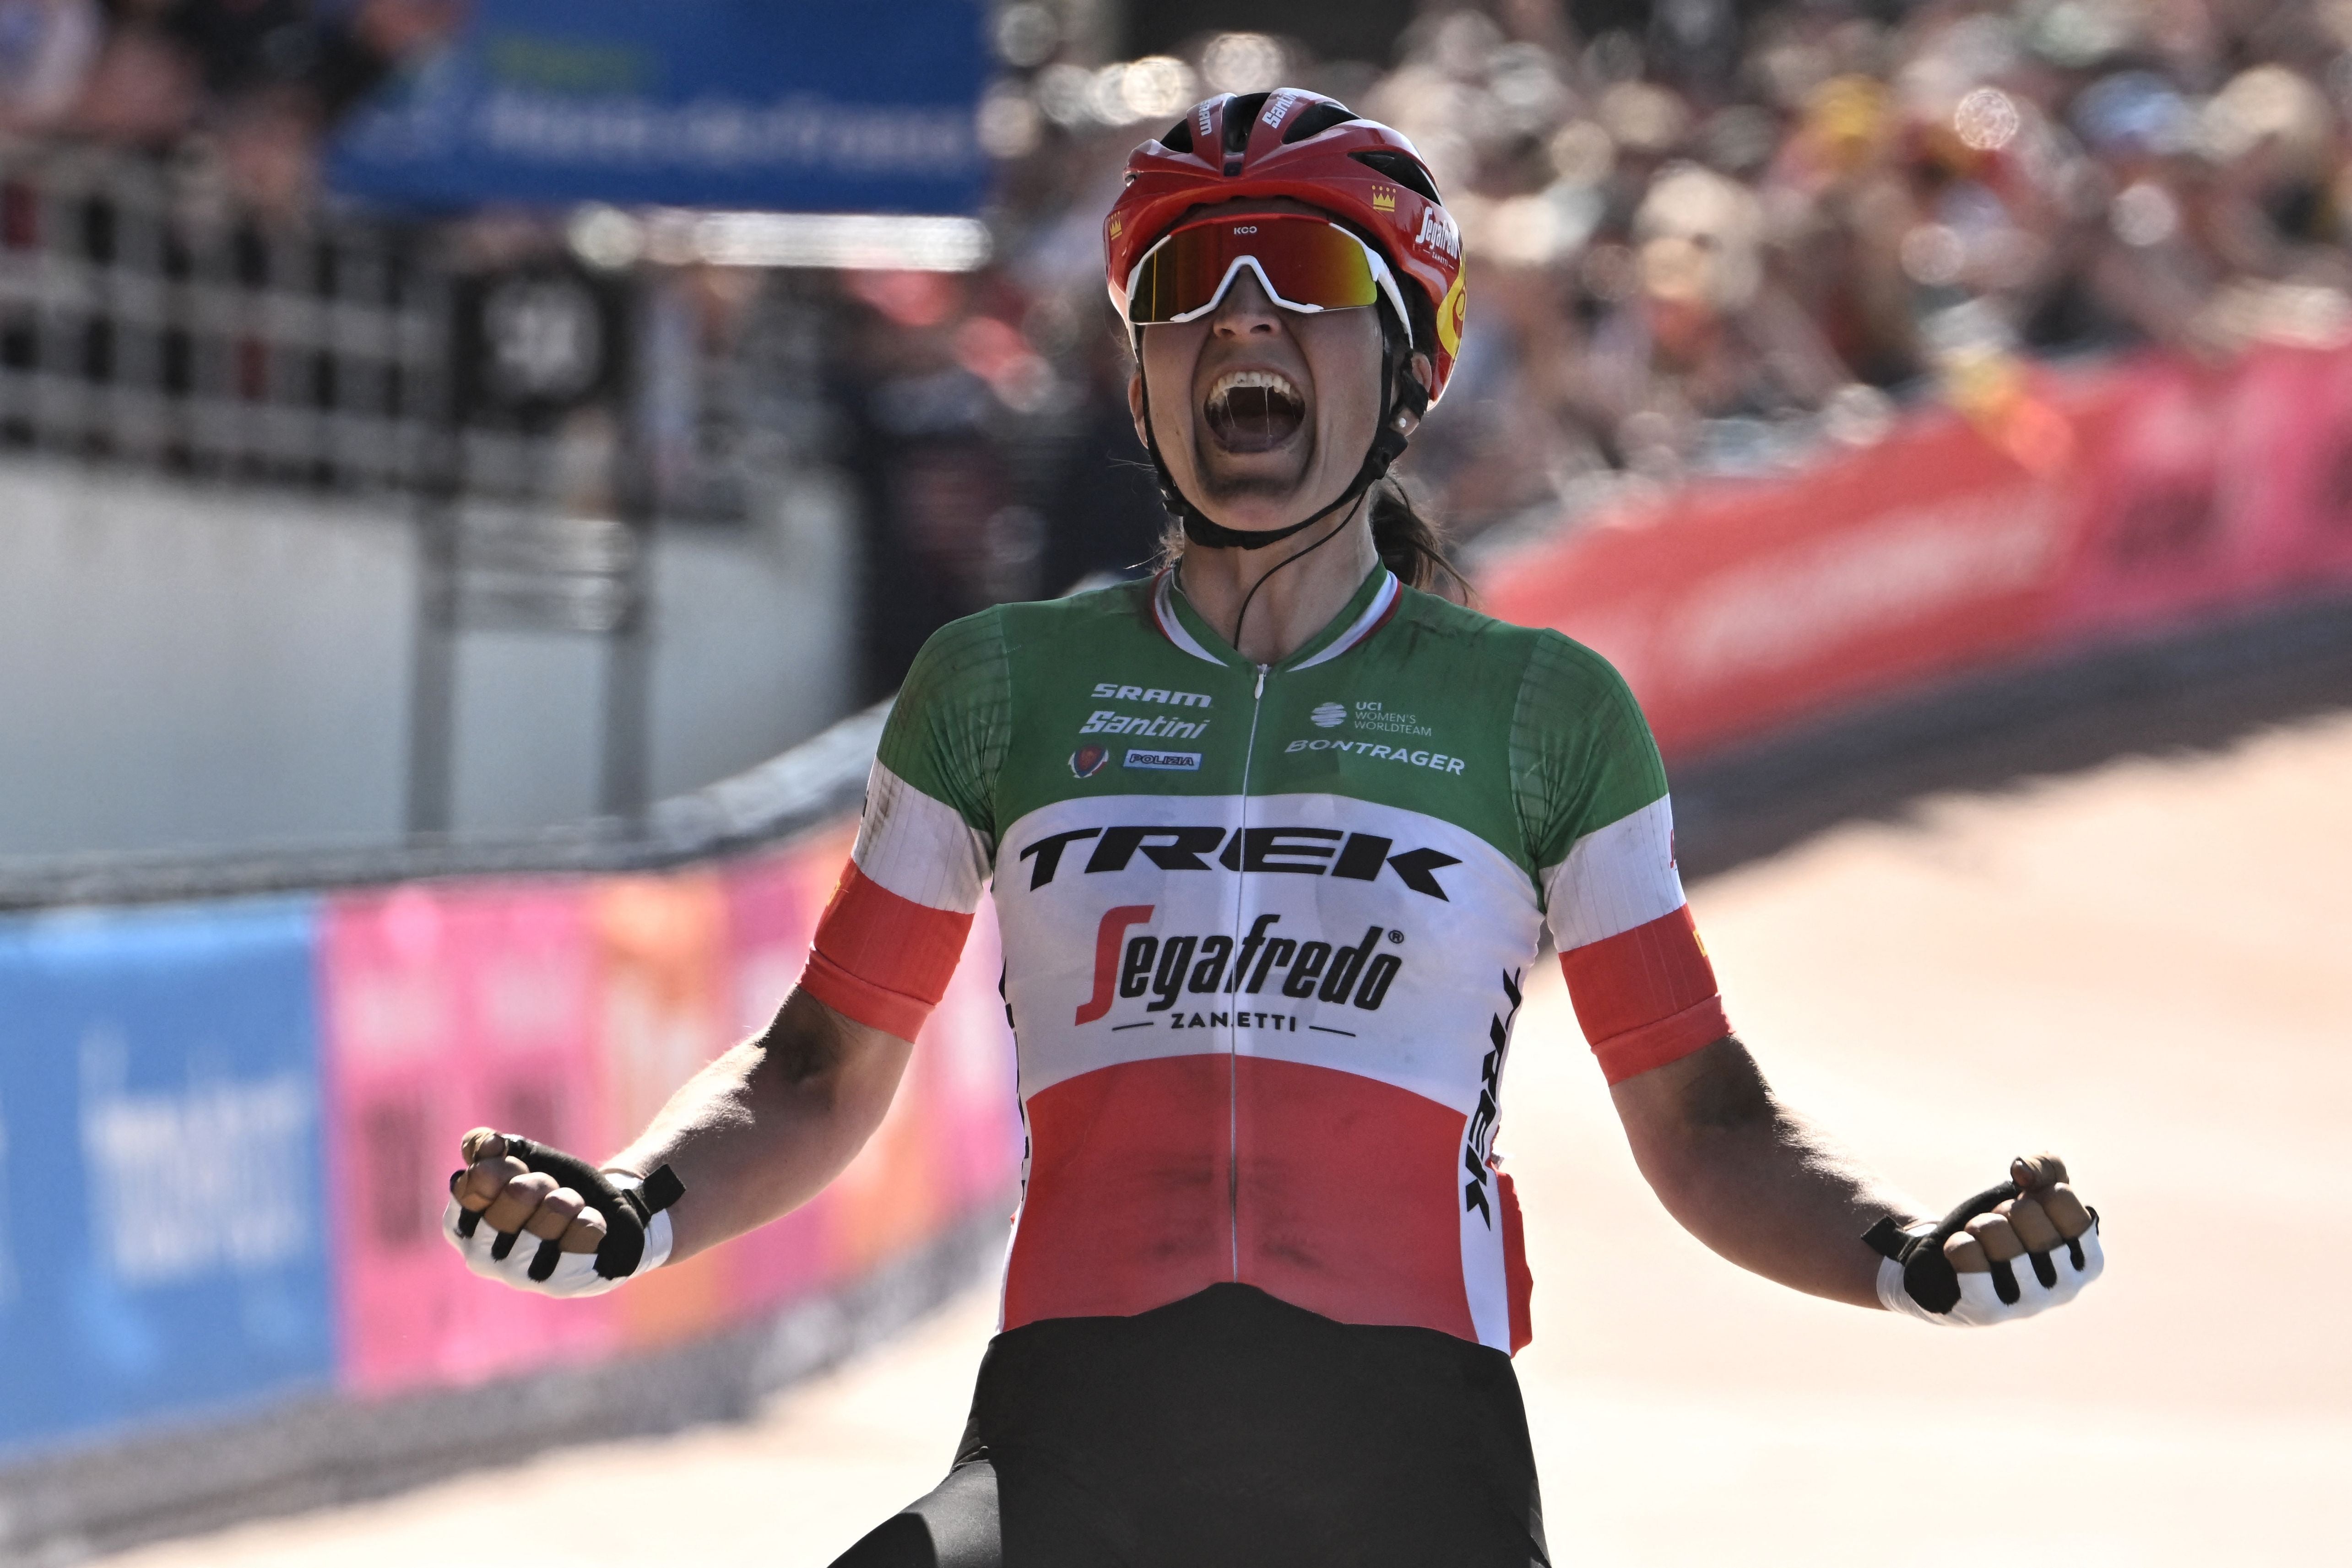 Elisa Longo Borghini Claims Second Edition Of Womens Paris Roubaix The Independent